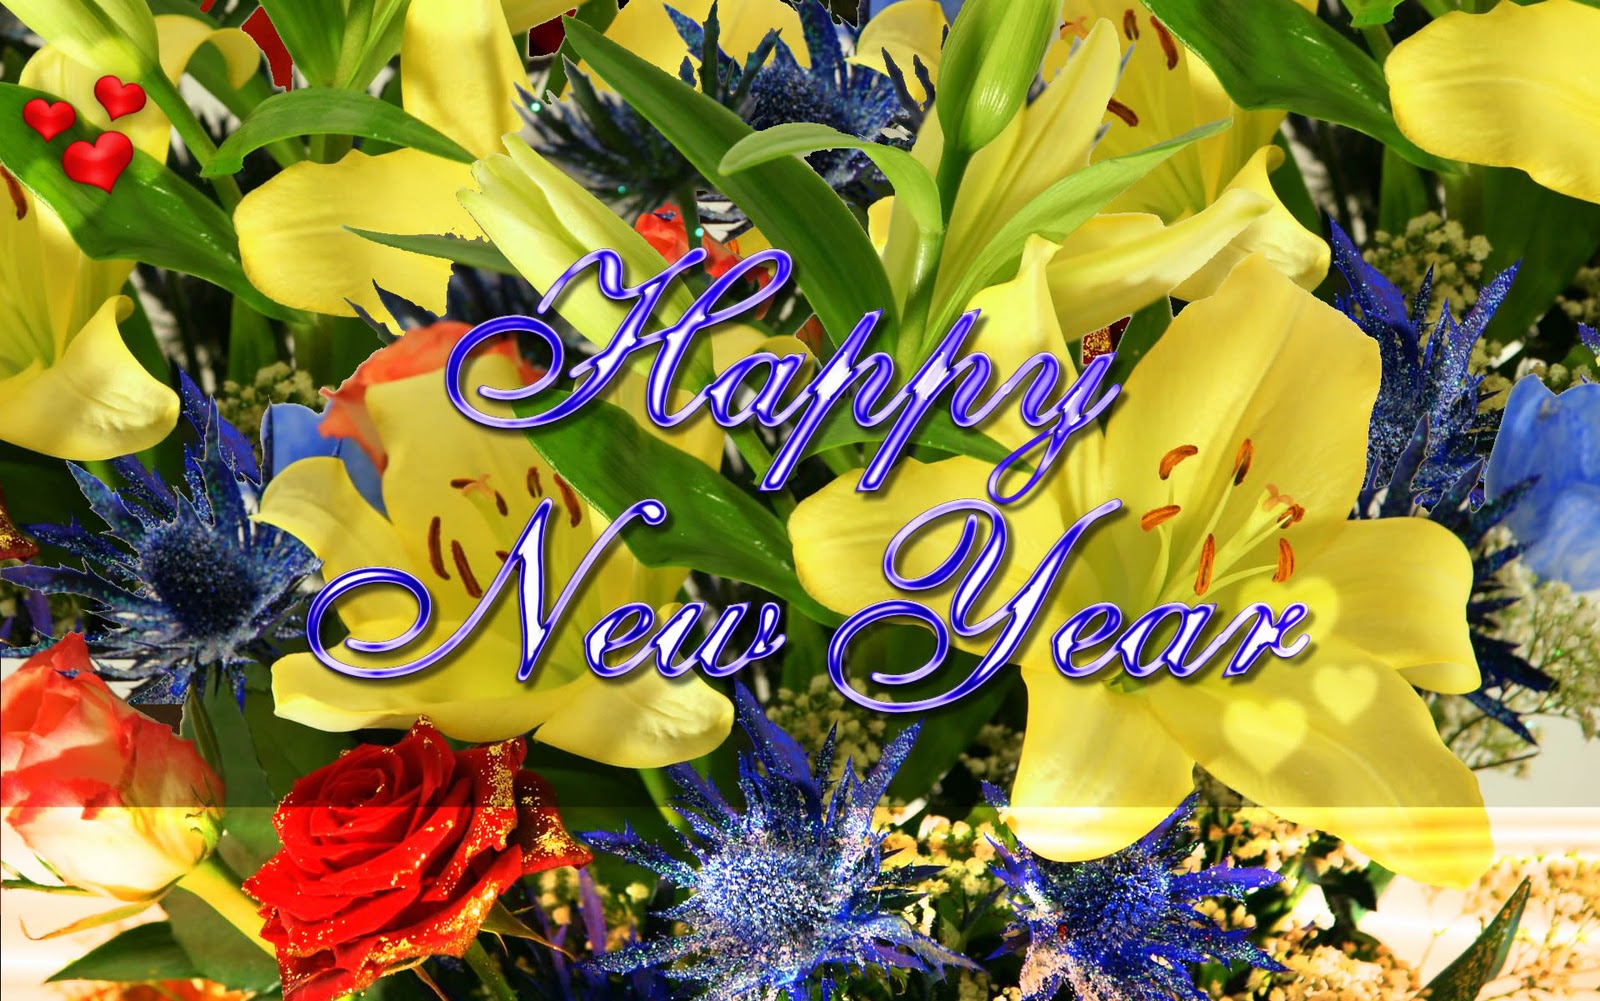 Happy New Year Achtergronden HD Wallpaper